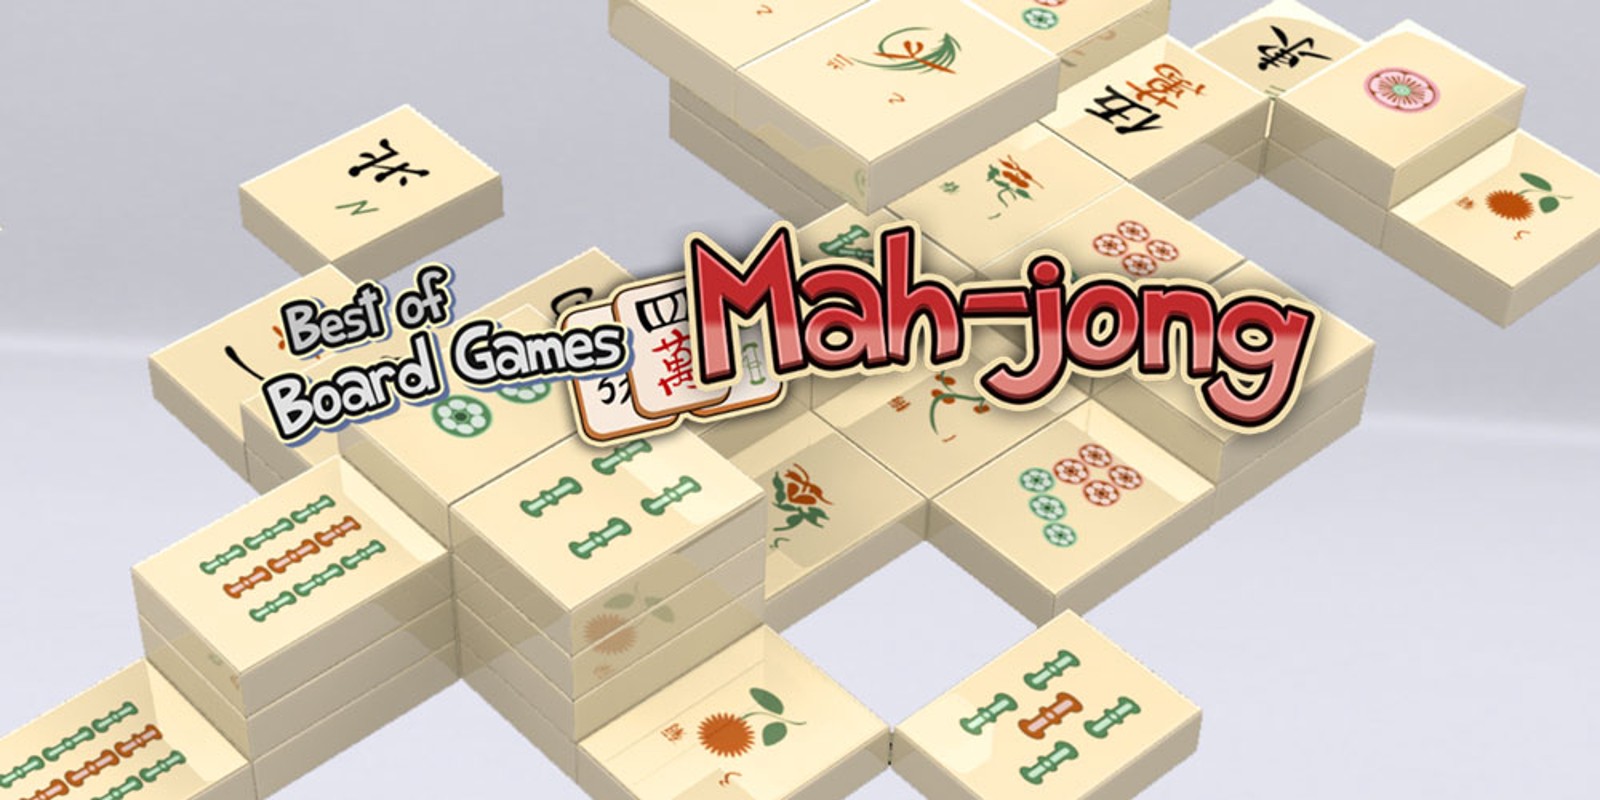 mahjong 3ds